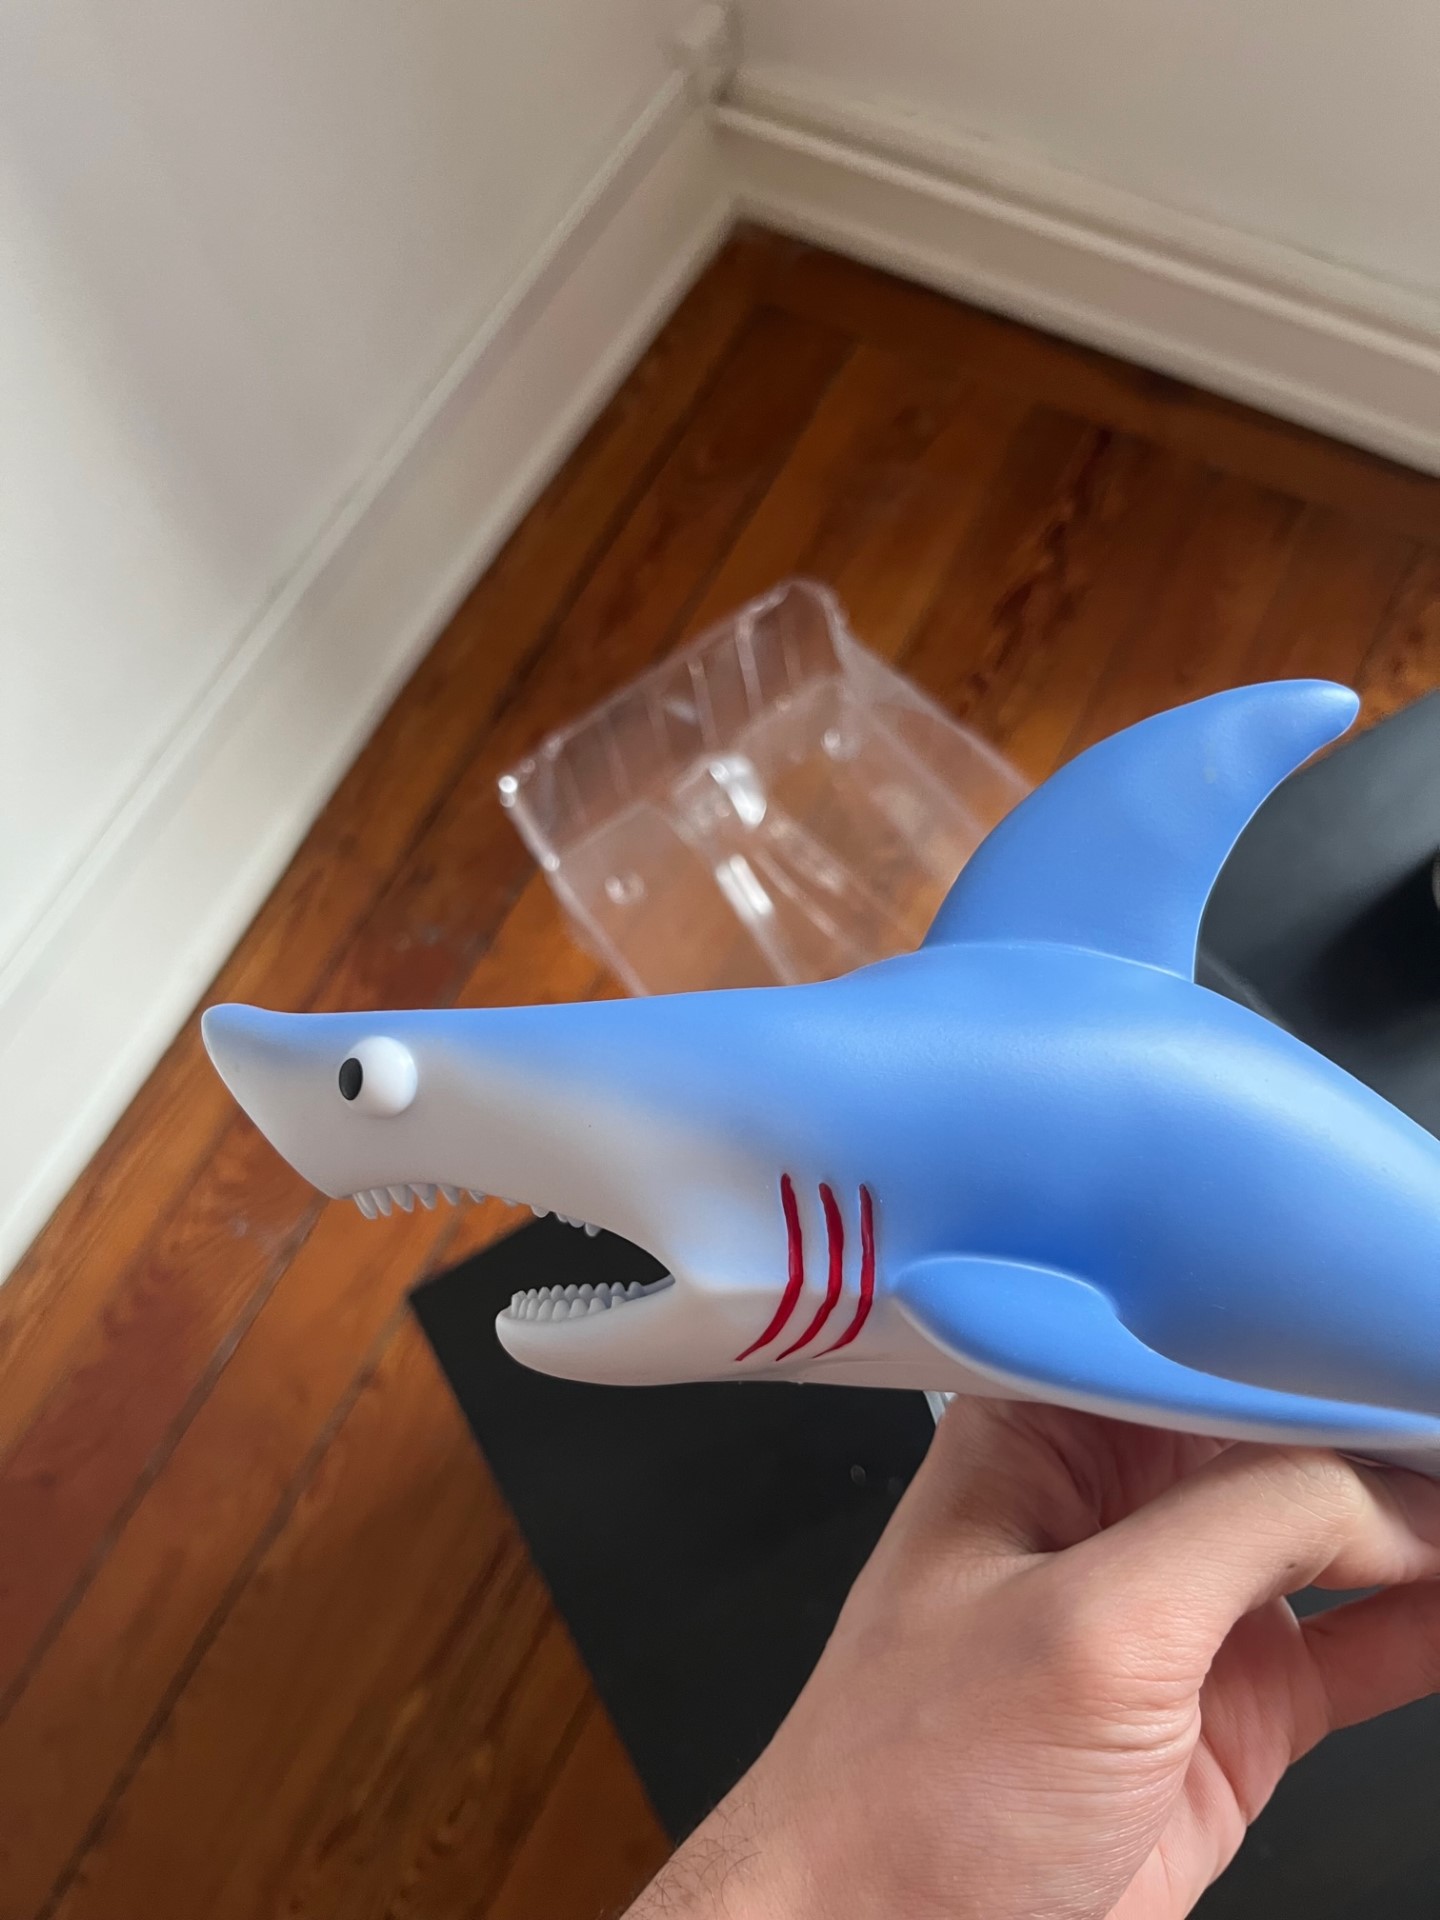 Replica of Shark (Jack Angel) as seen in Toy Story movie